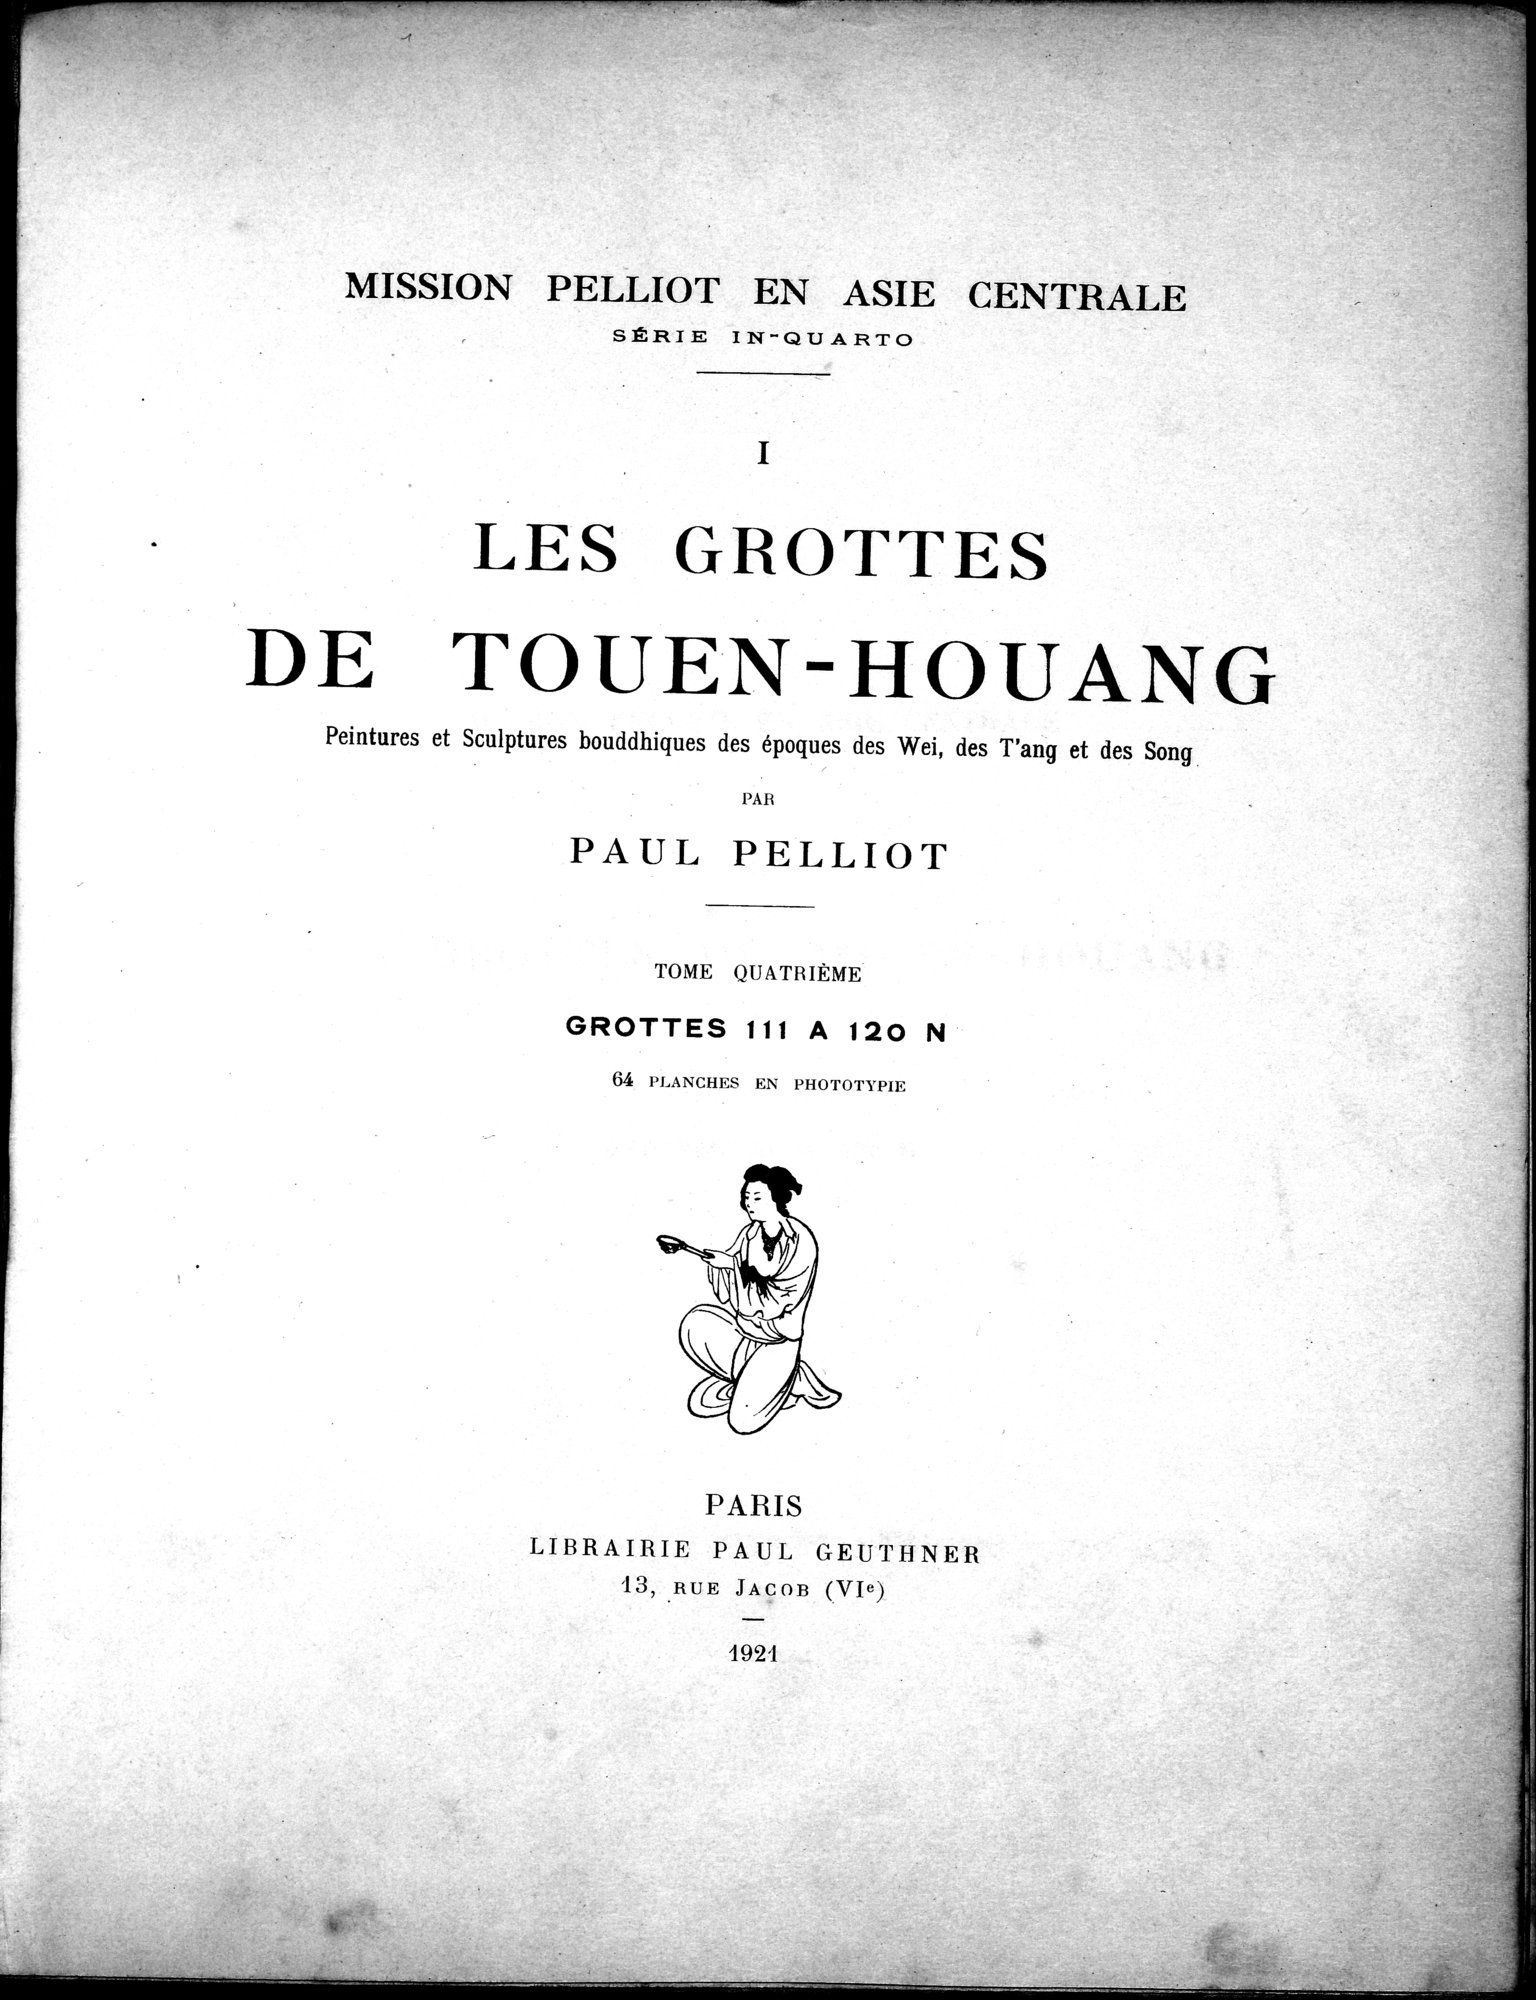 Les grottes de Touen-Houang : vol.4 / Page 3 (Grayscale High Resolution Image)